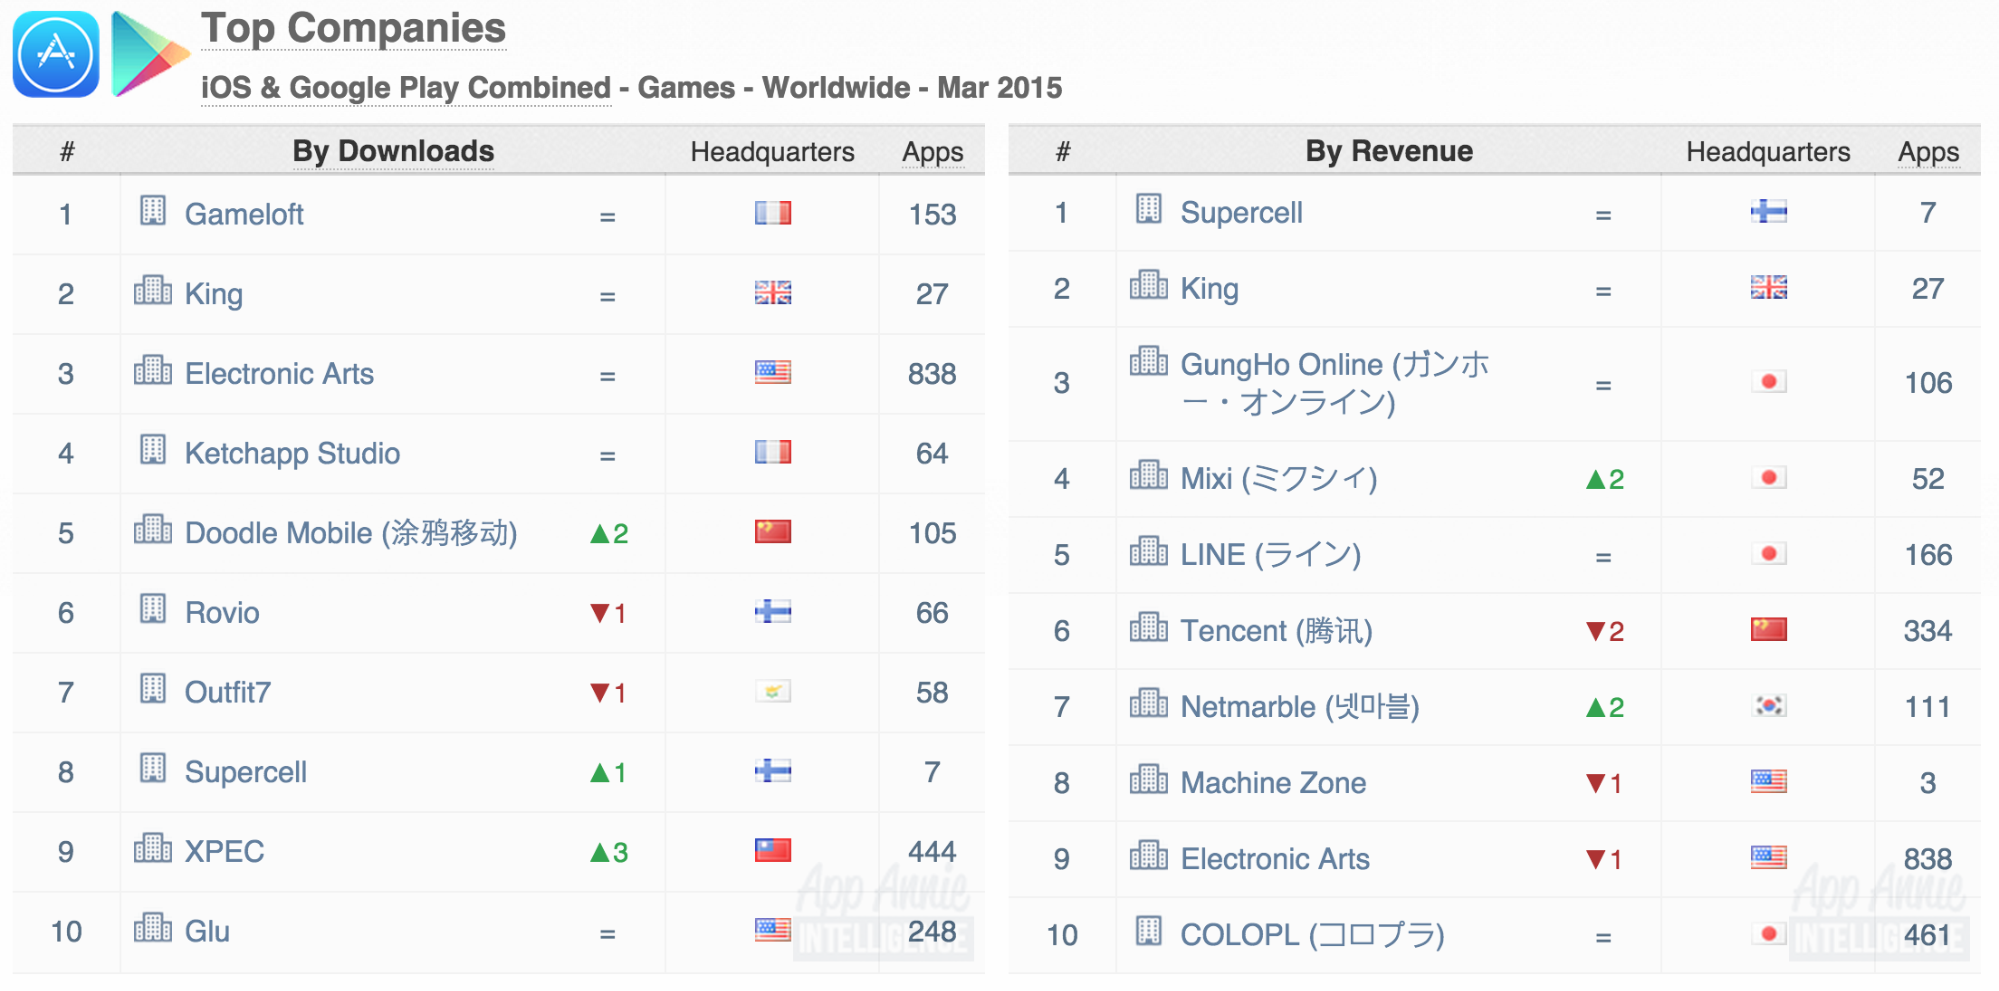 Top Companies iOS Google Play Games Worldwide March 2015